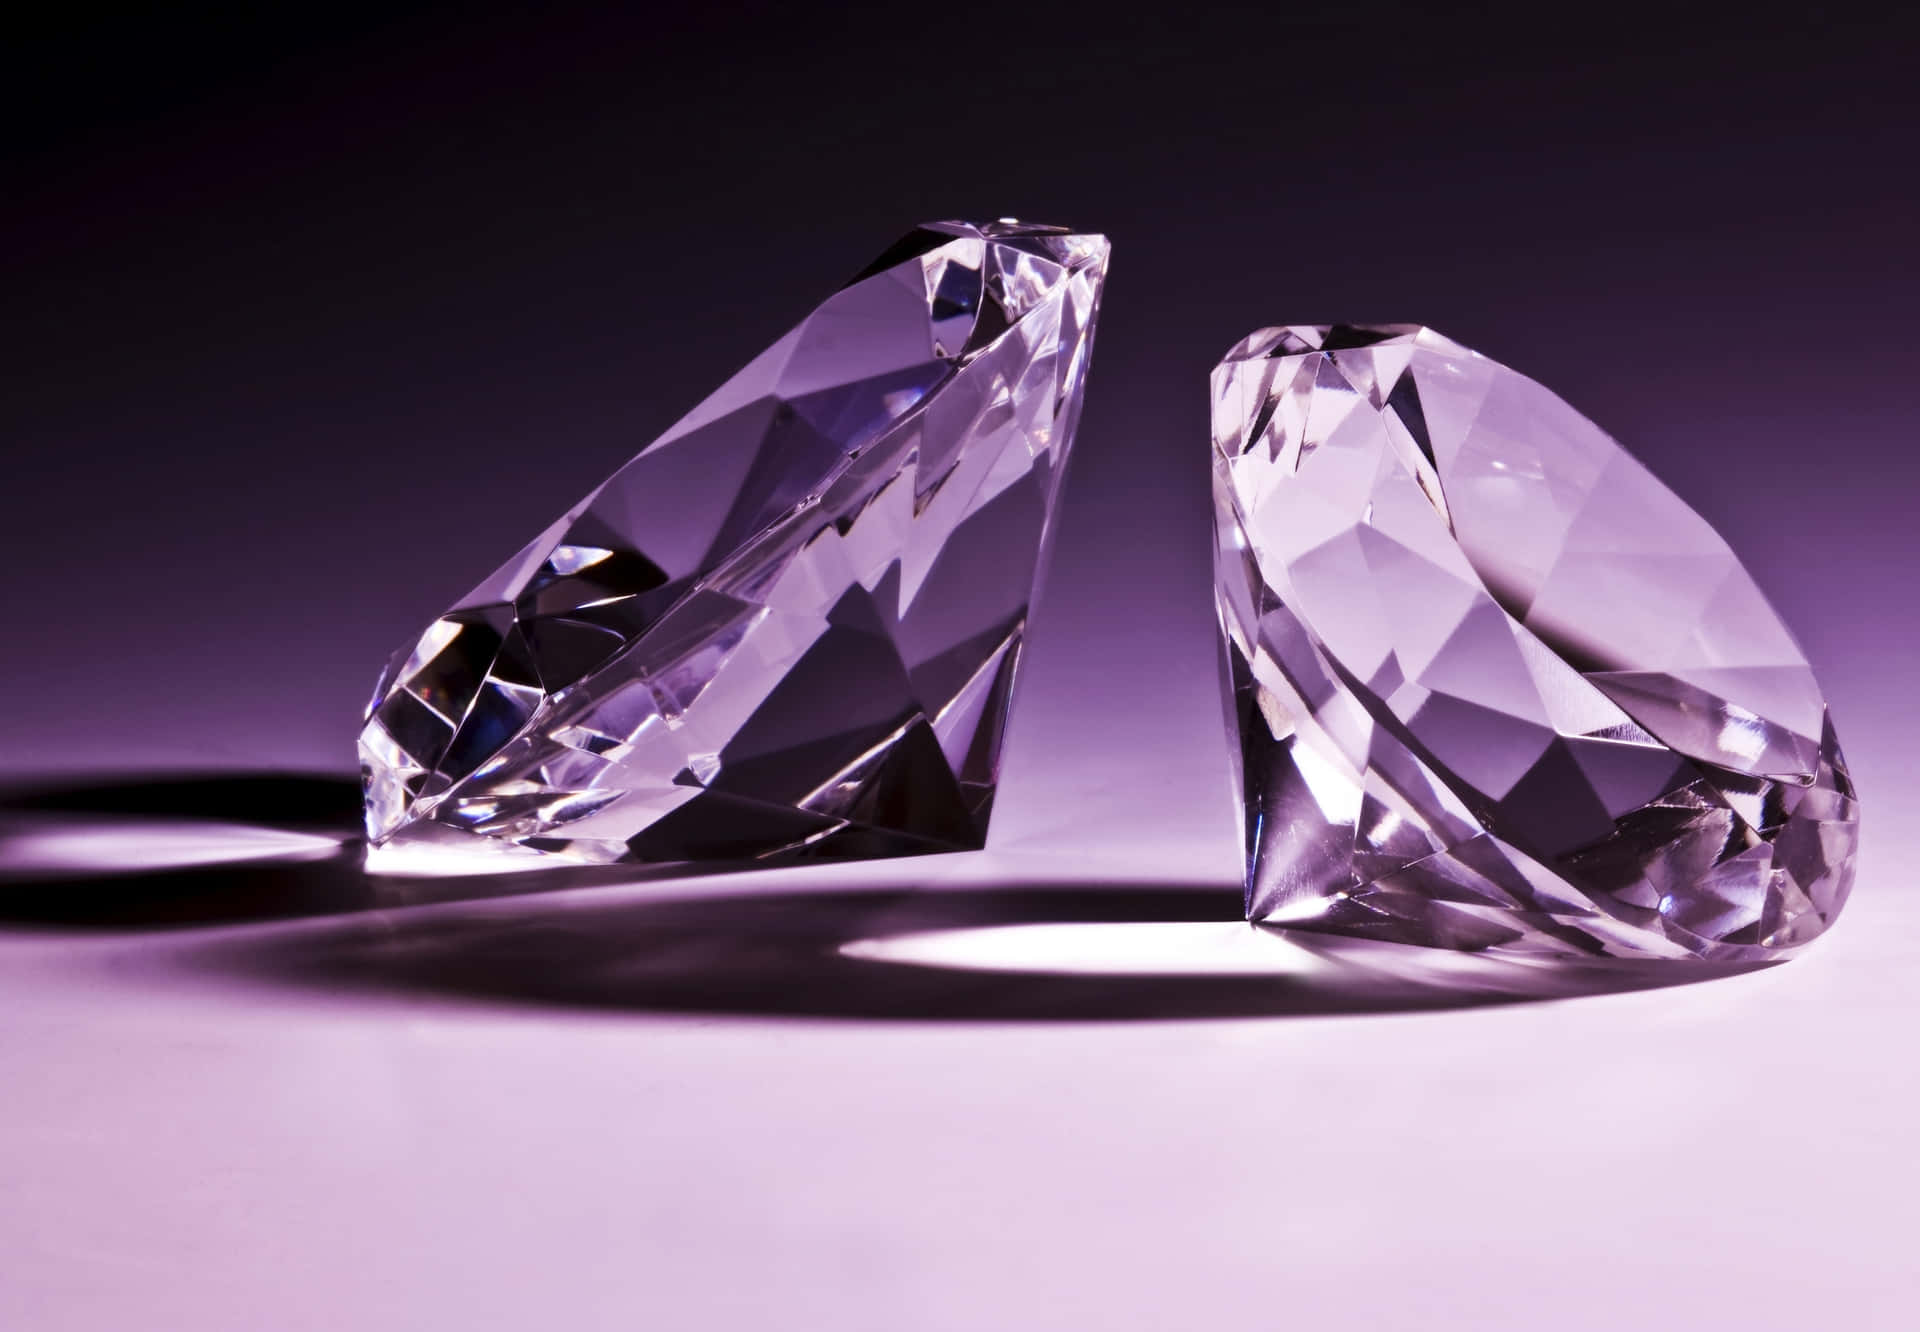 "exquisite Luxury Diamond Glowing Under The Spotlight"